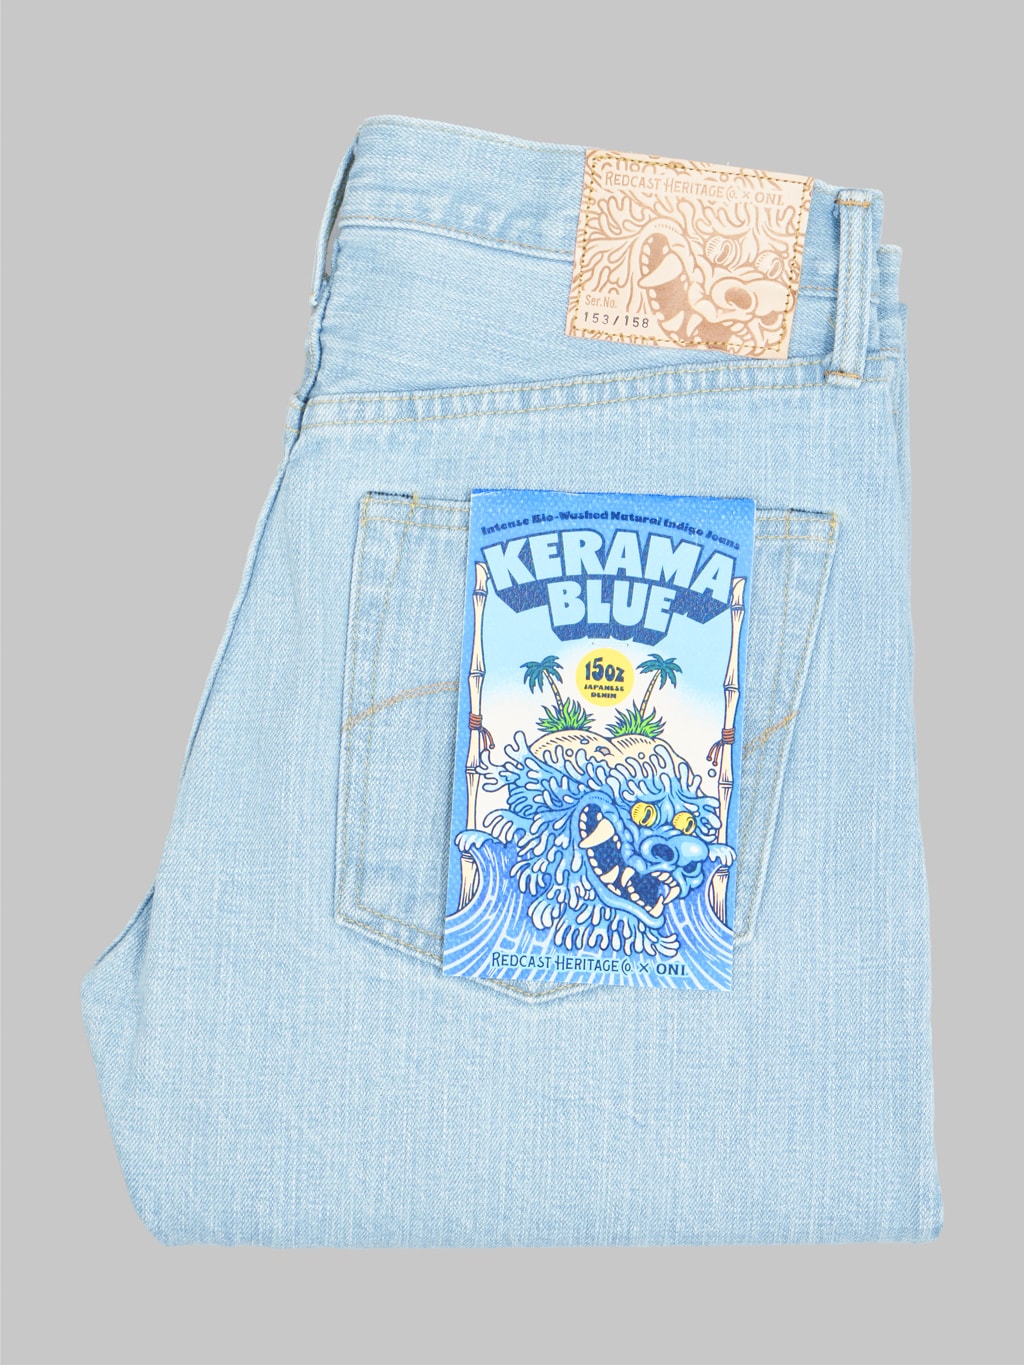 redcast heritage x oni denim kerama blue 15oz selvedge jeans